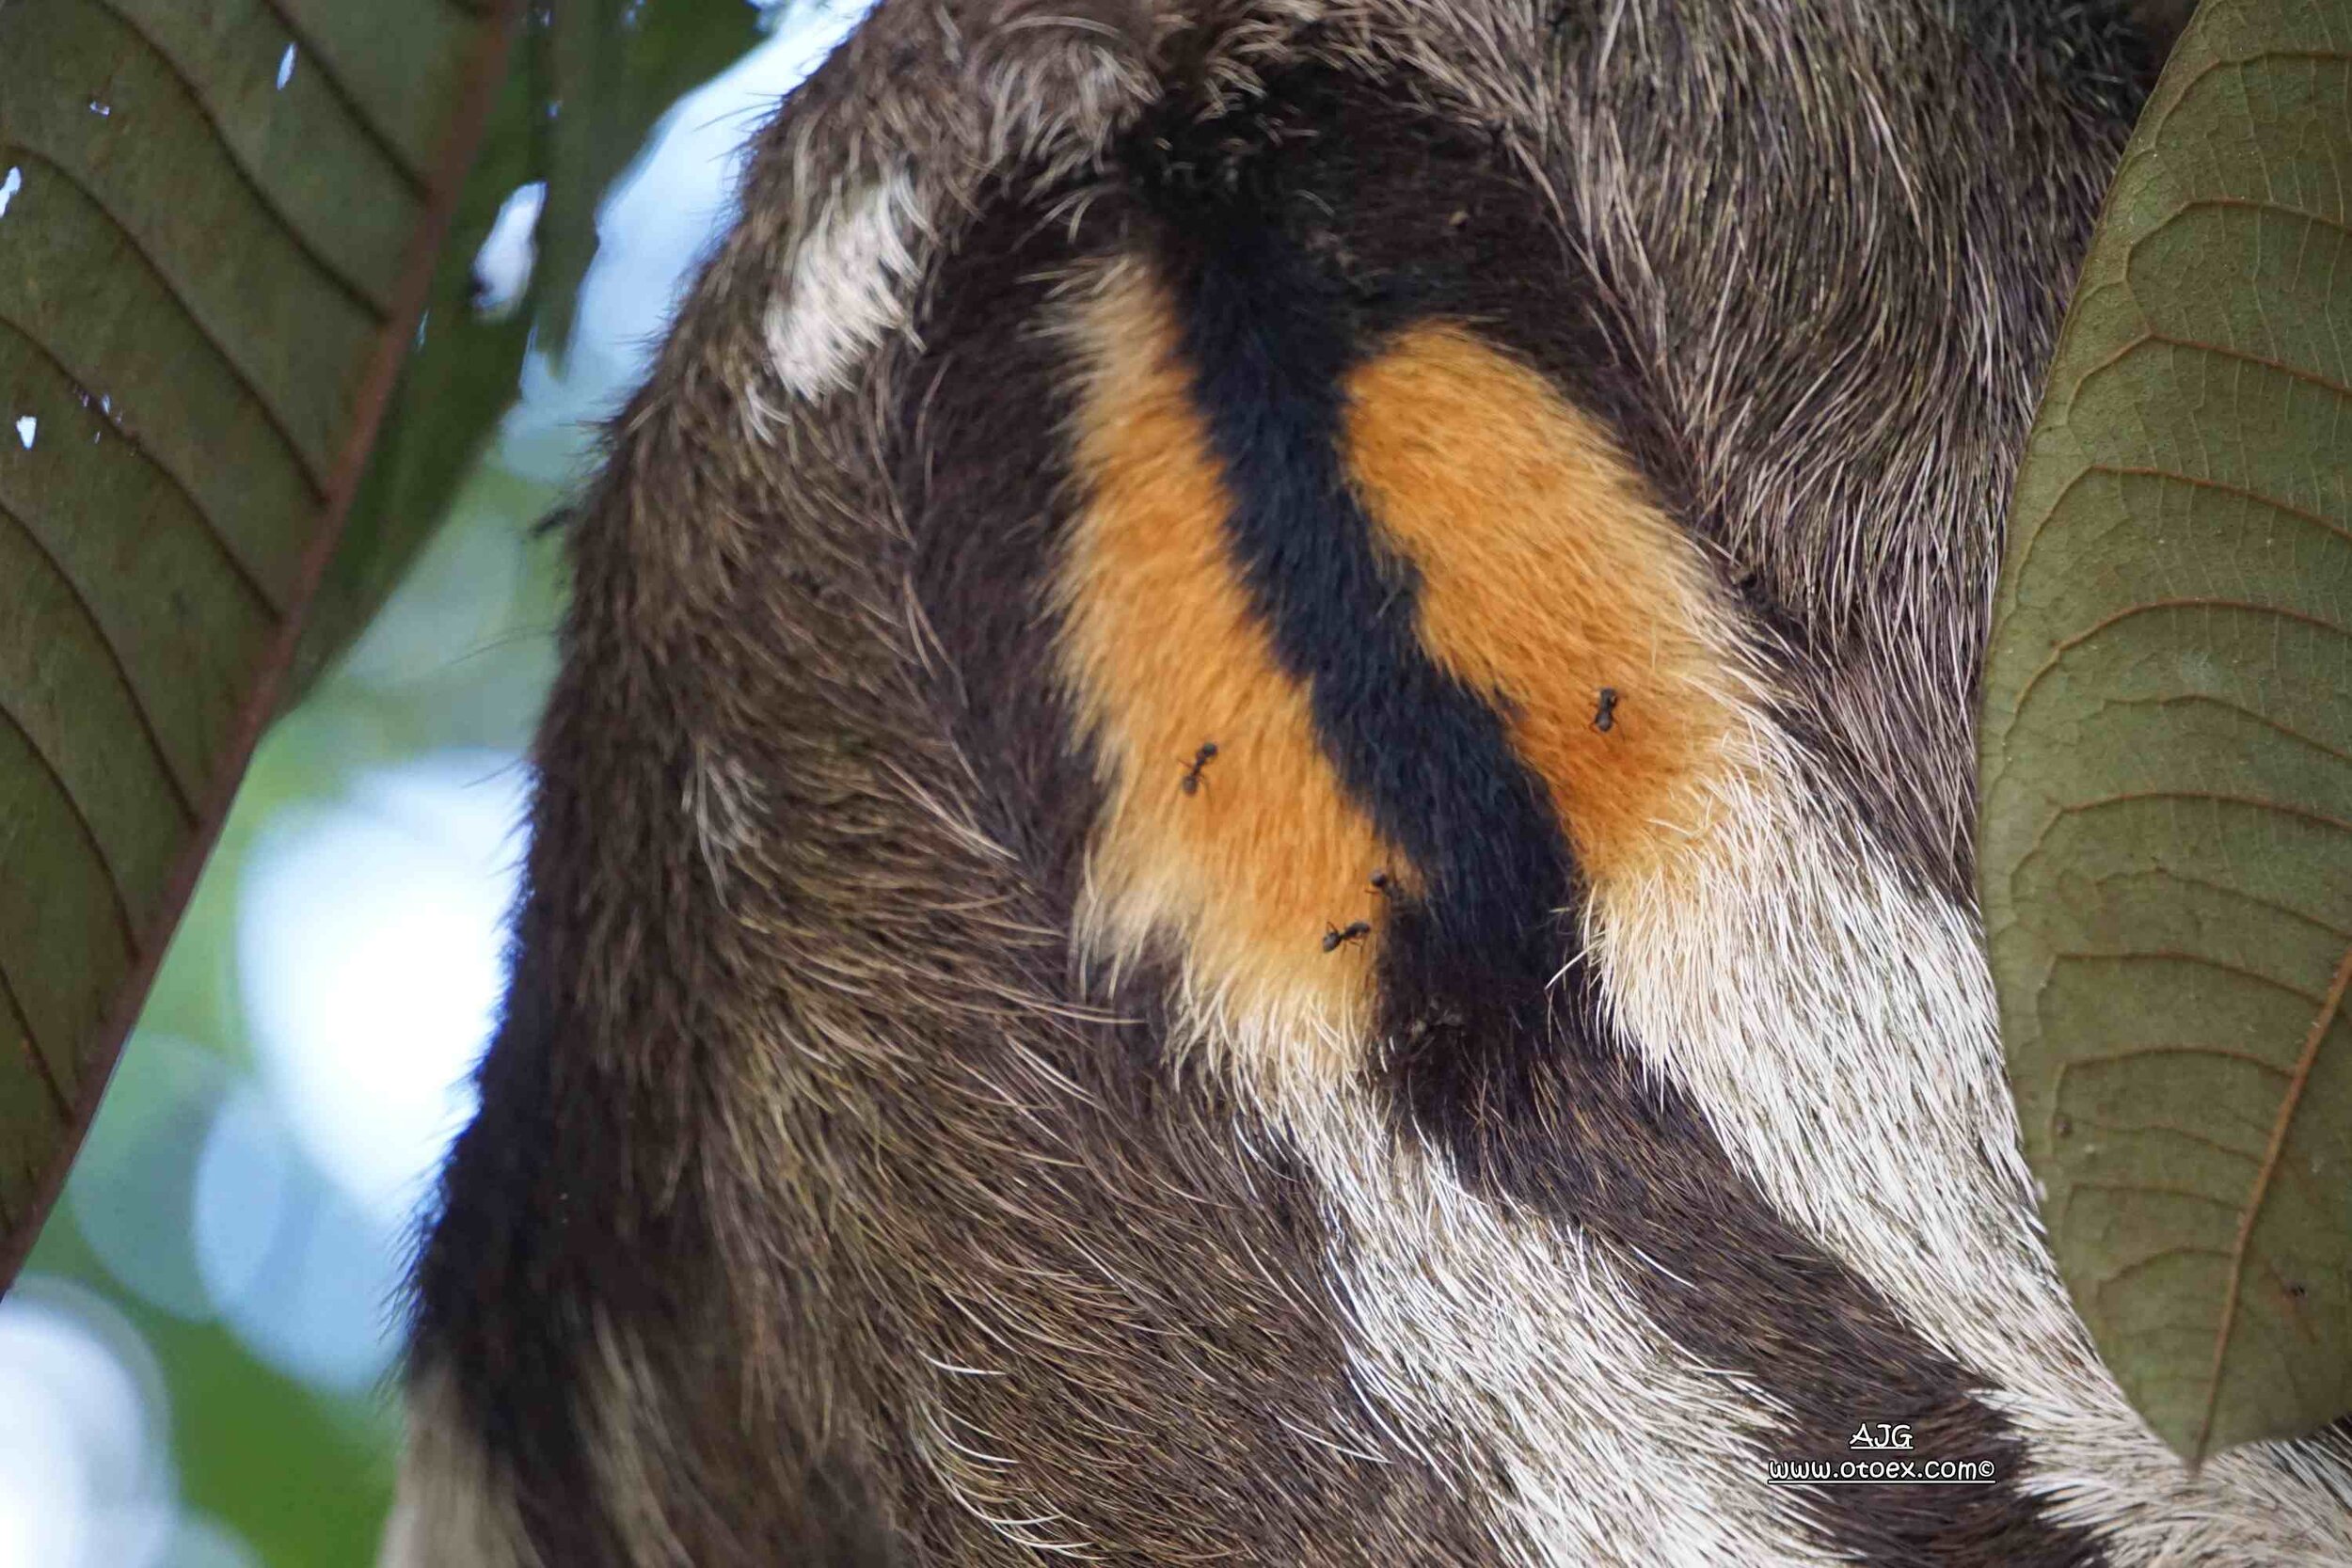 Male sloth back patch